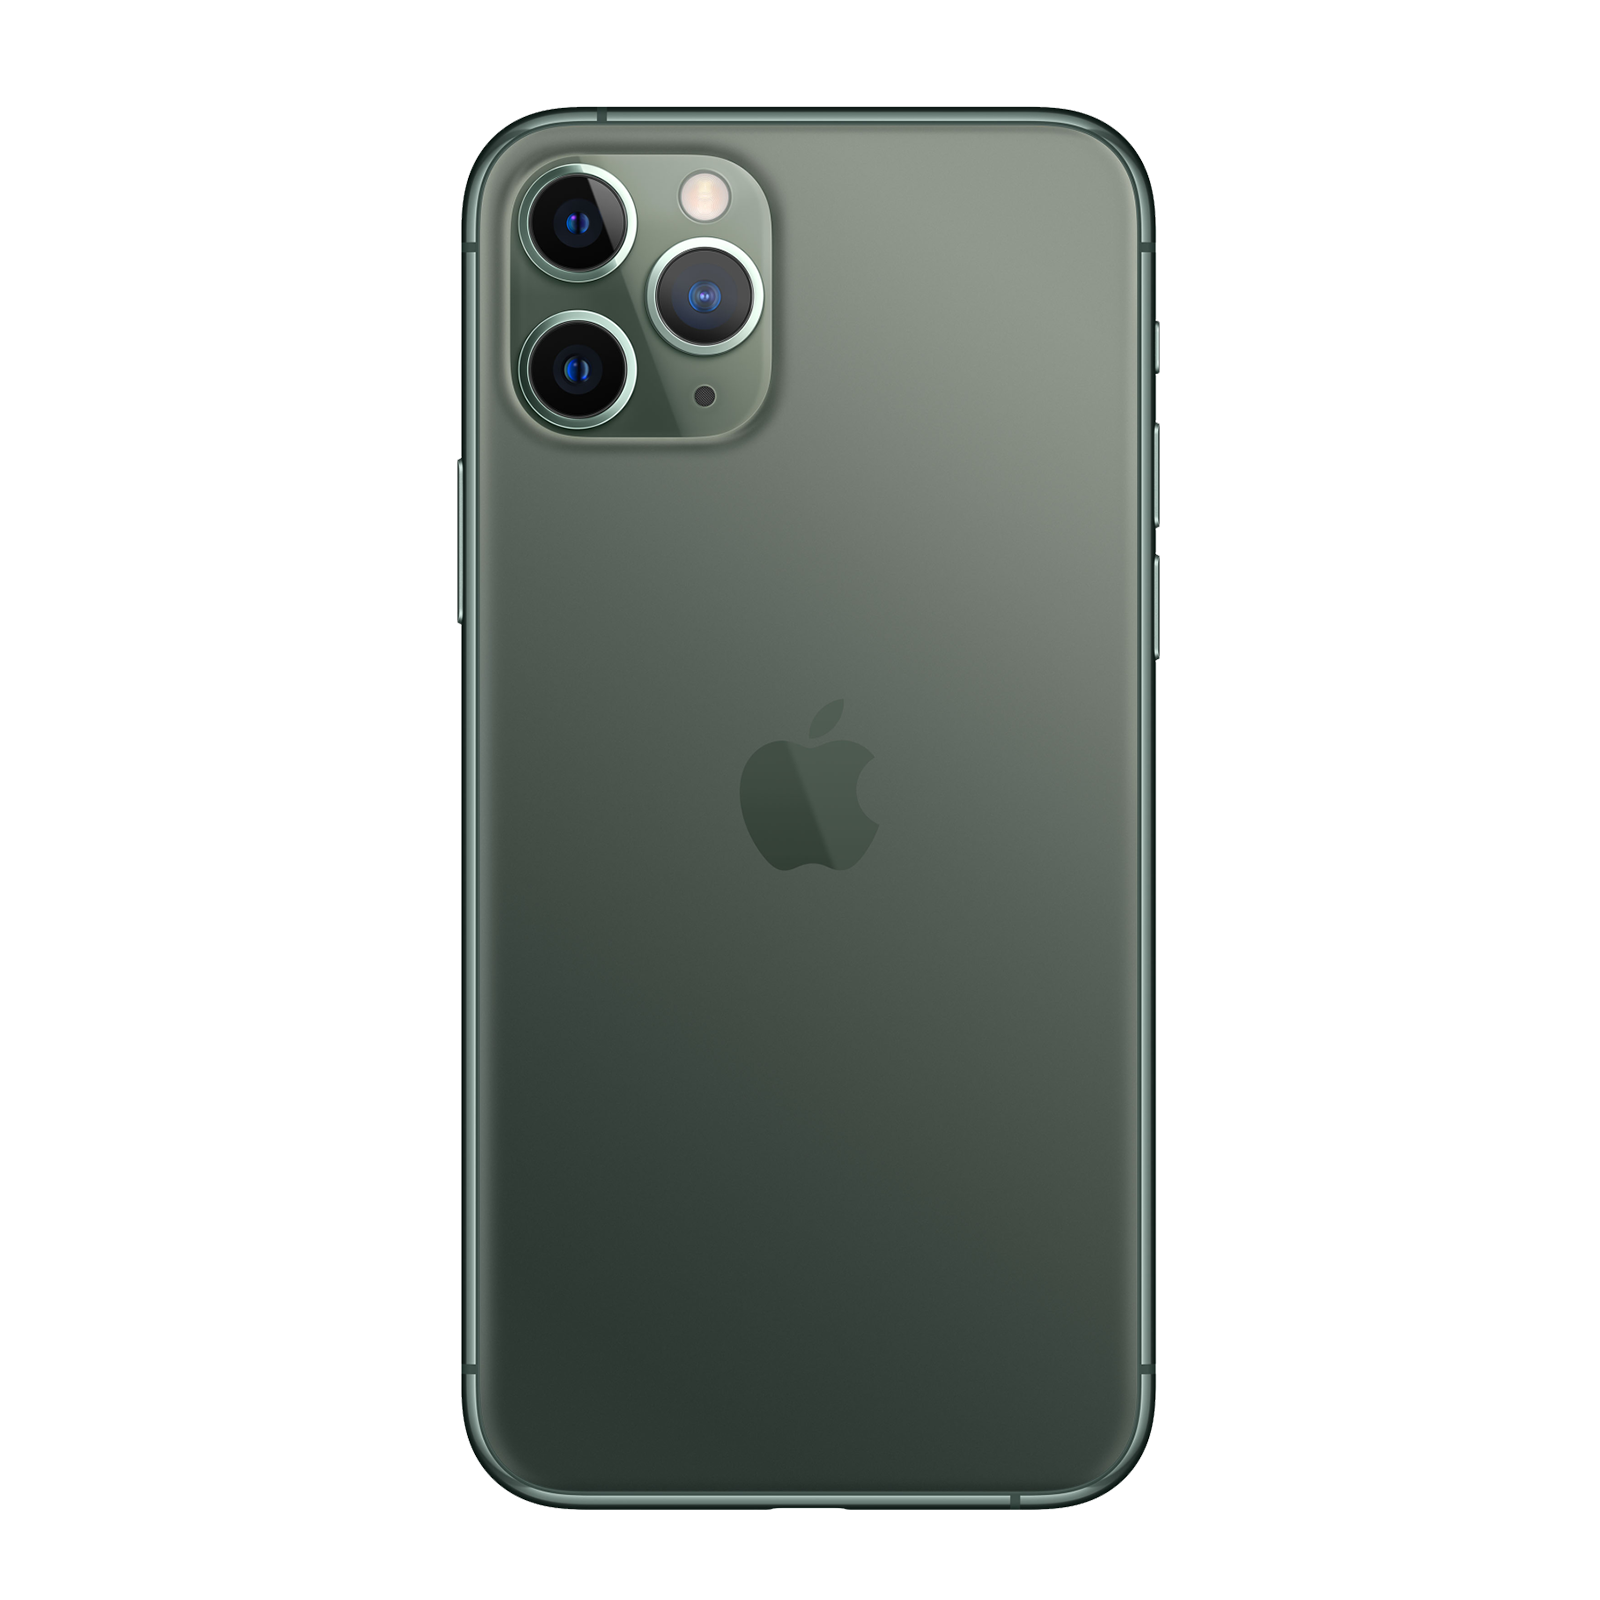 Apple iPhone 11 Pro Max 64GB Midnight Green Very Good - - Unlocked